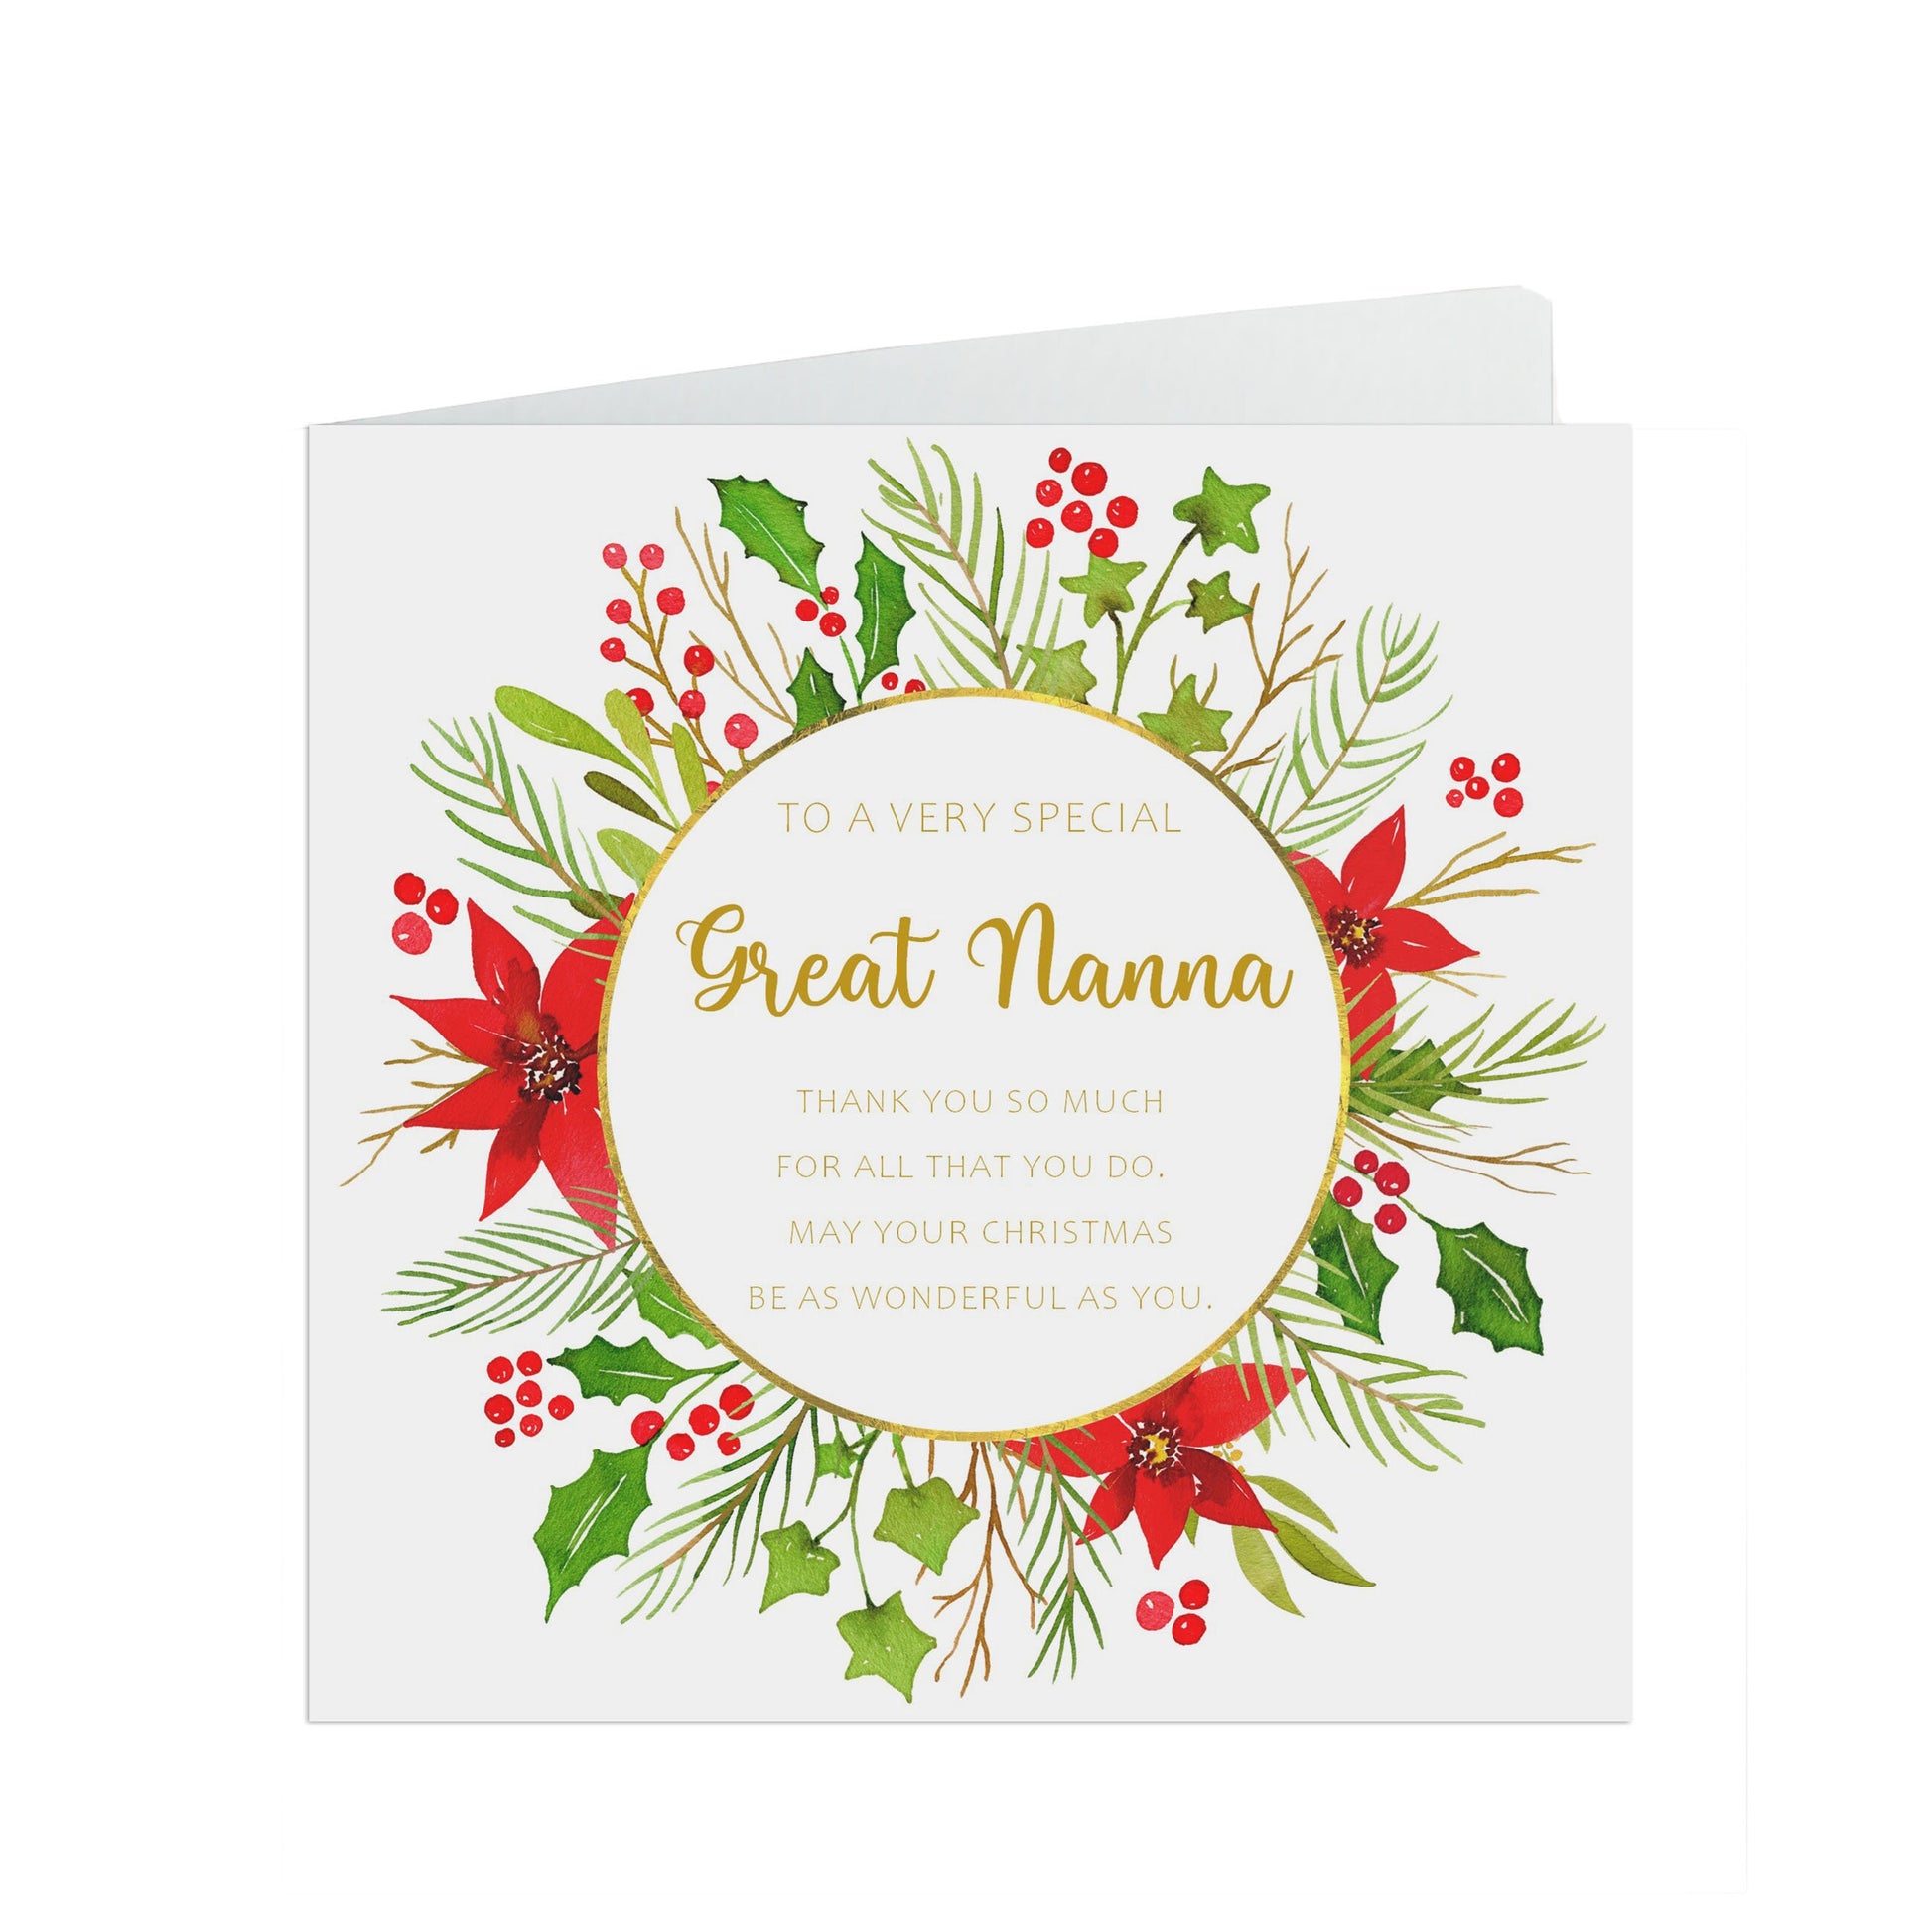 Great Nanna Christmas Card, Traditional Poinsettia Design